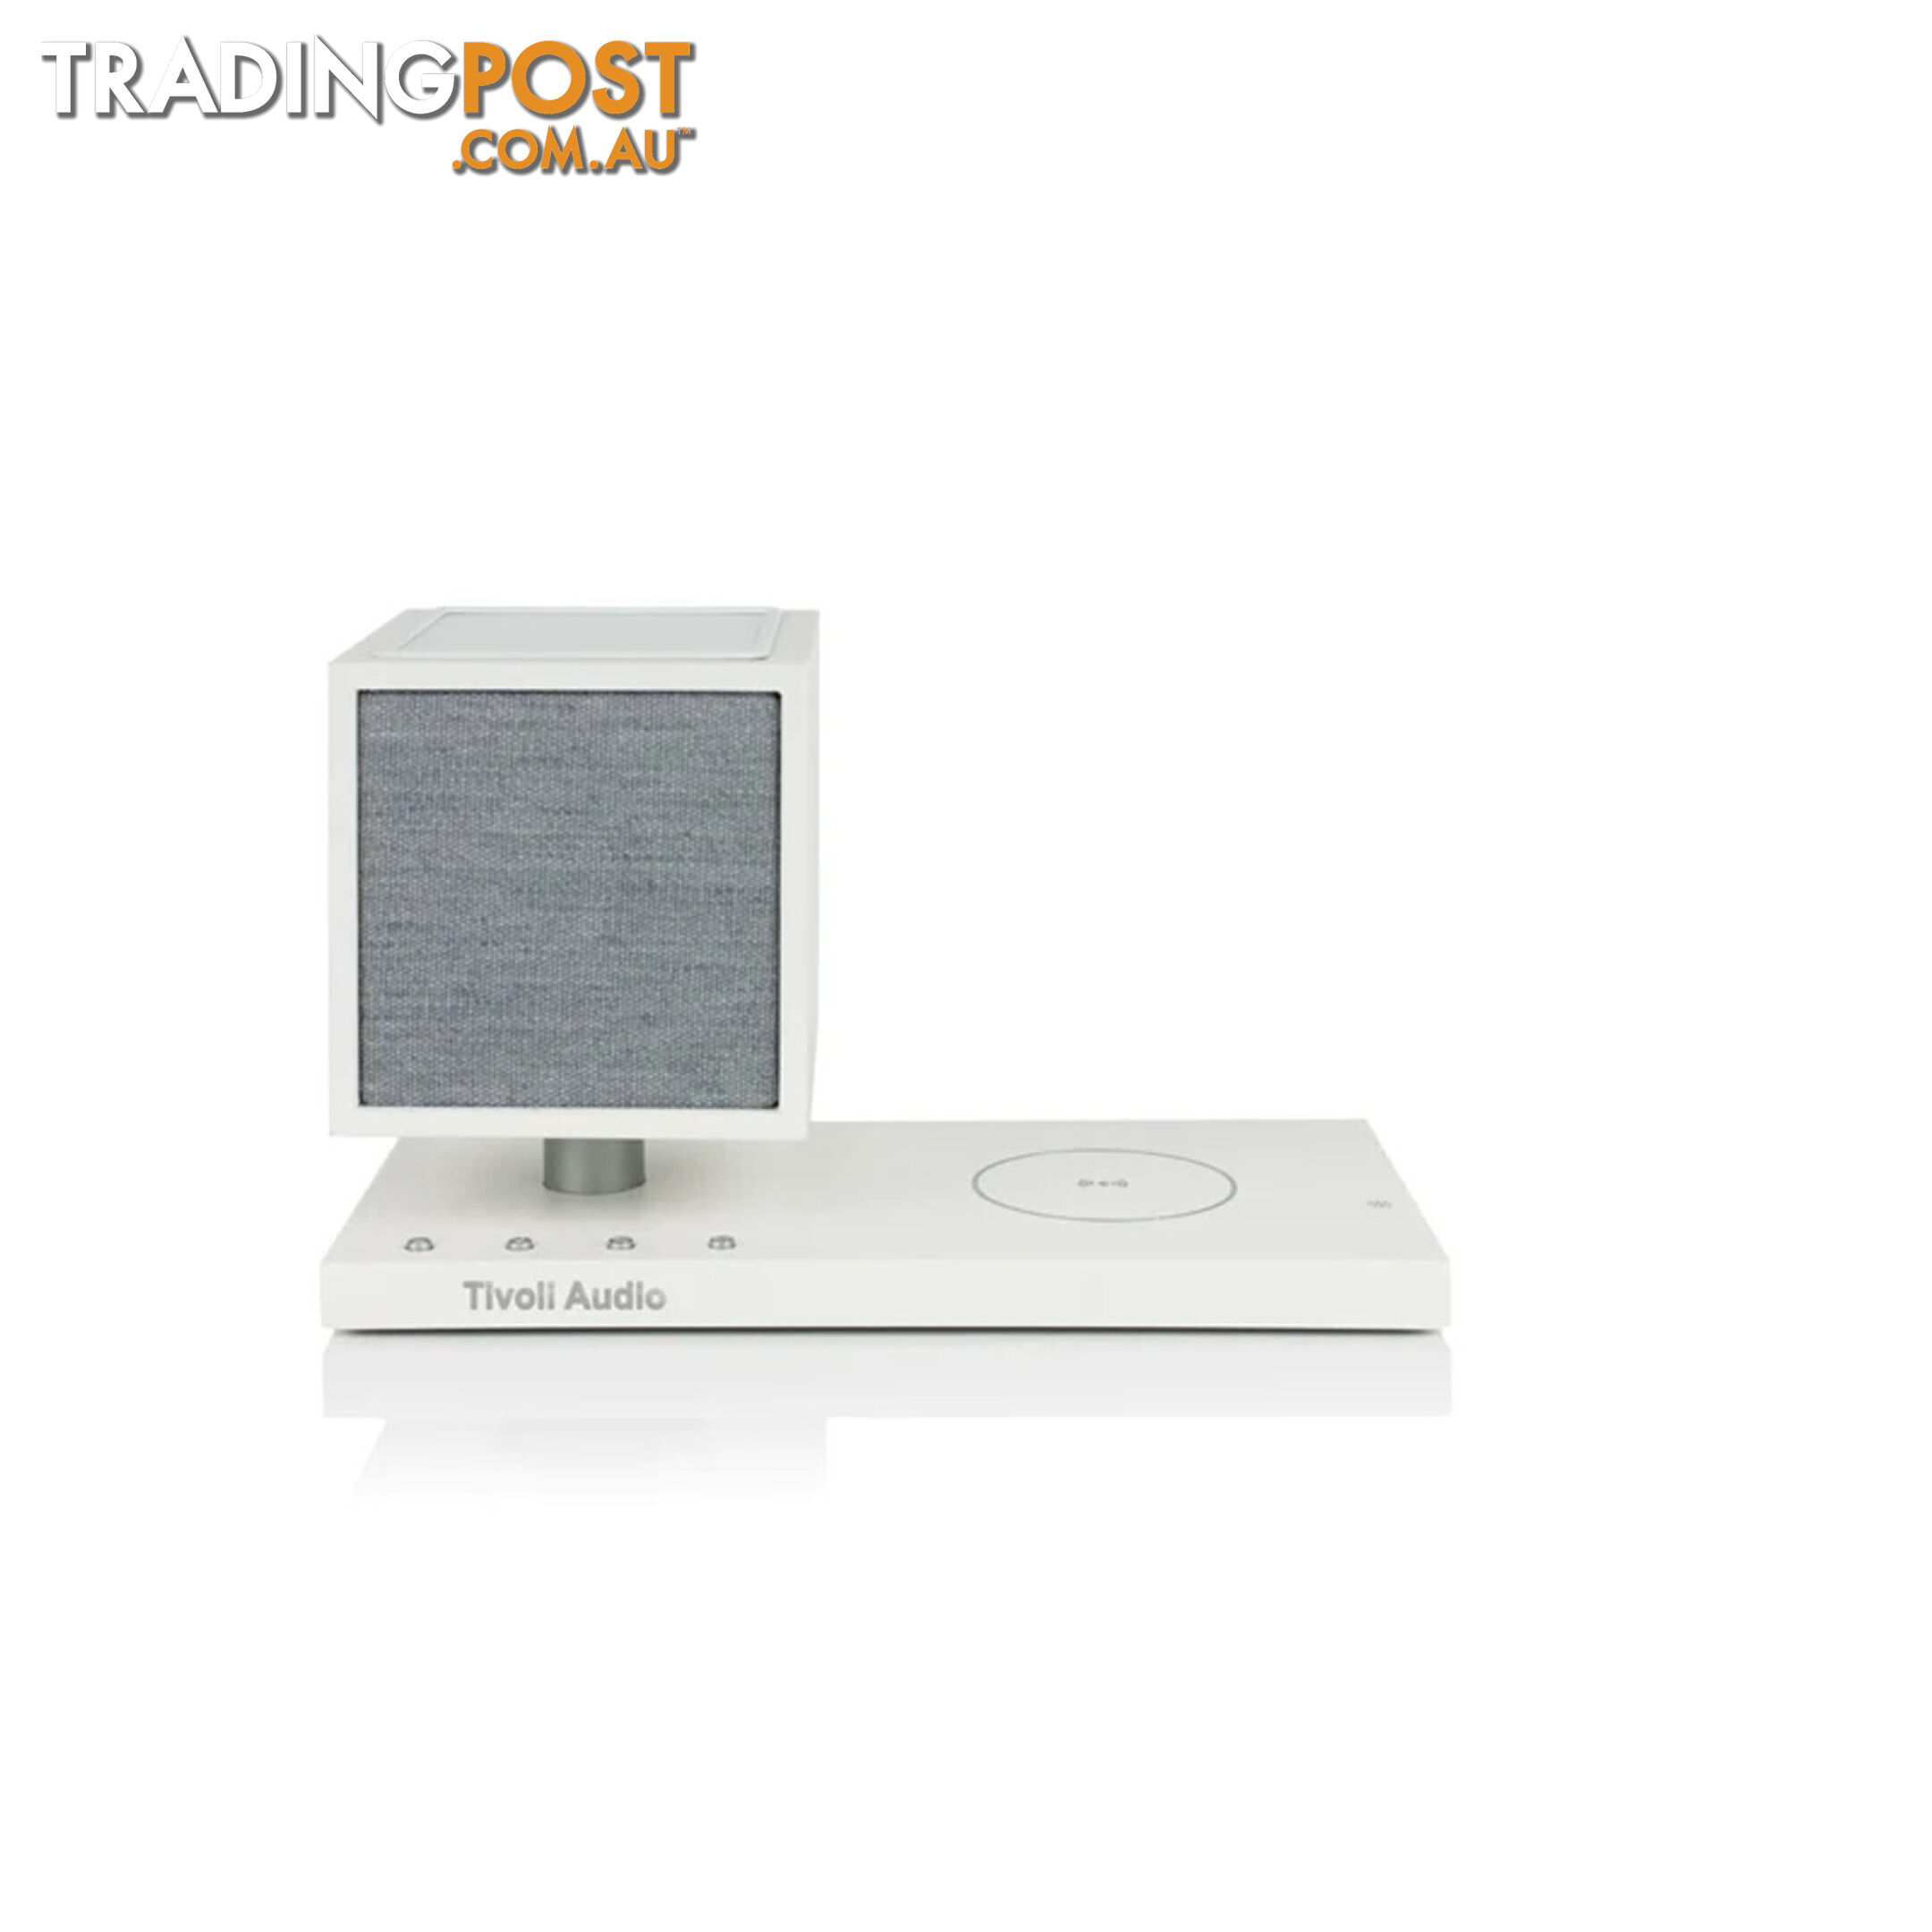 Tivoli Audio Revive in White & Gray